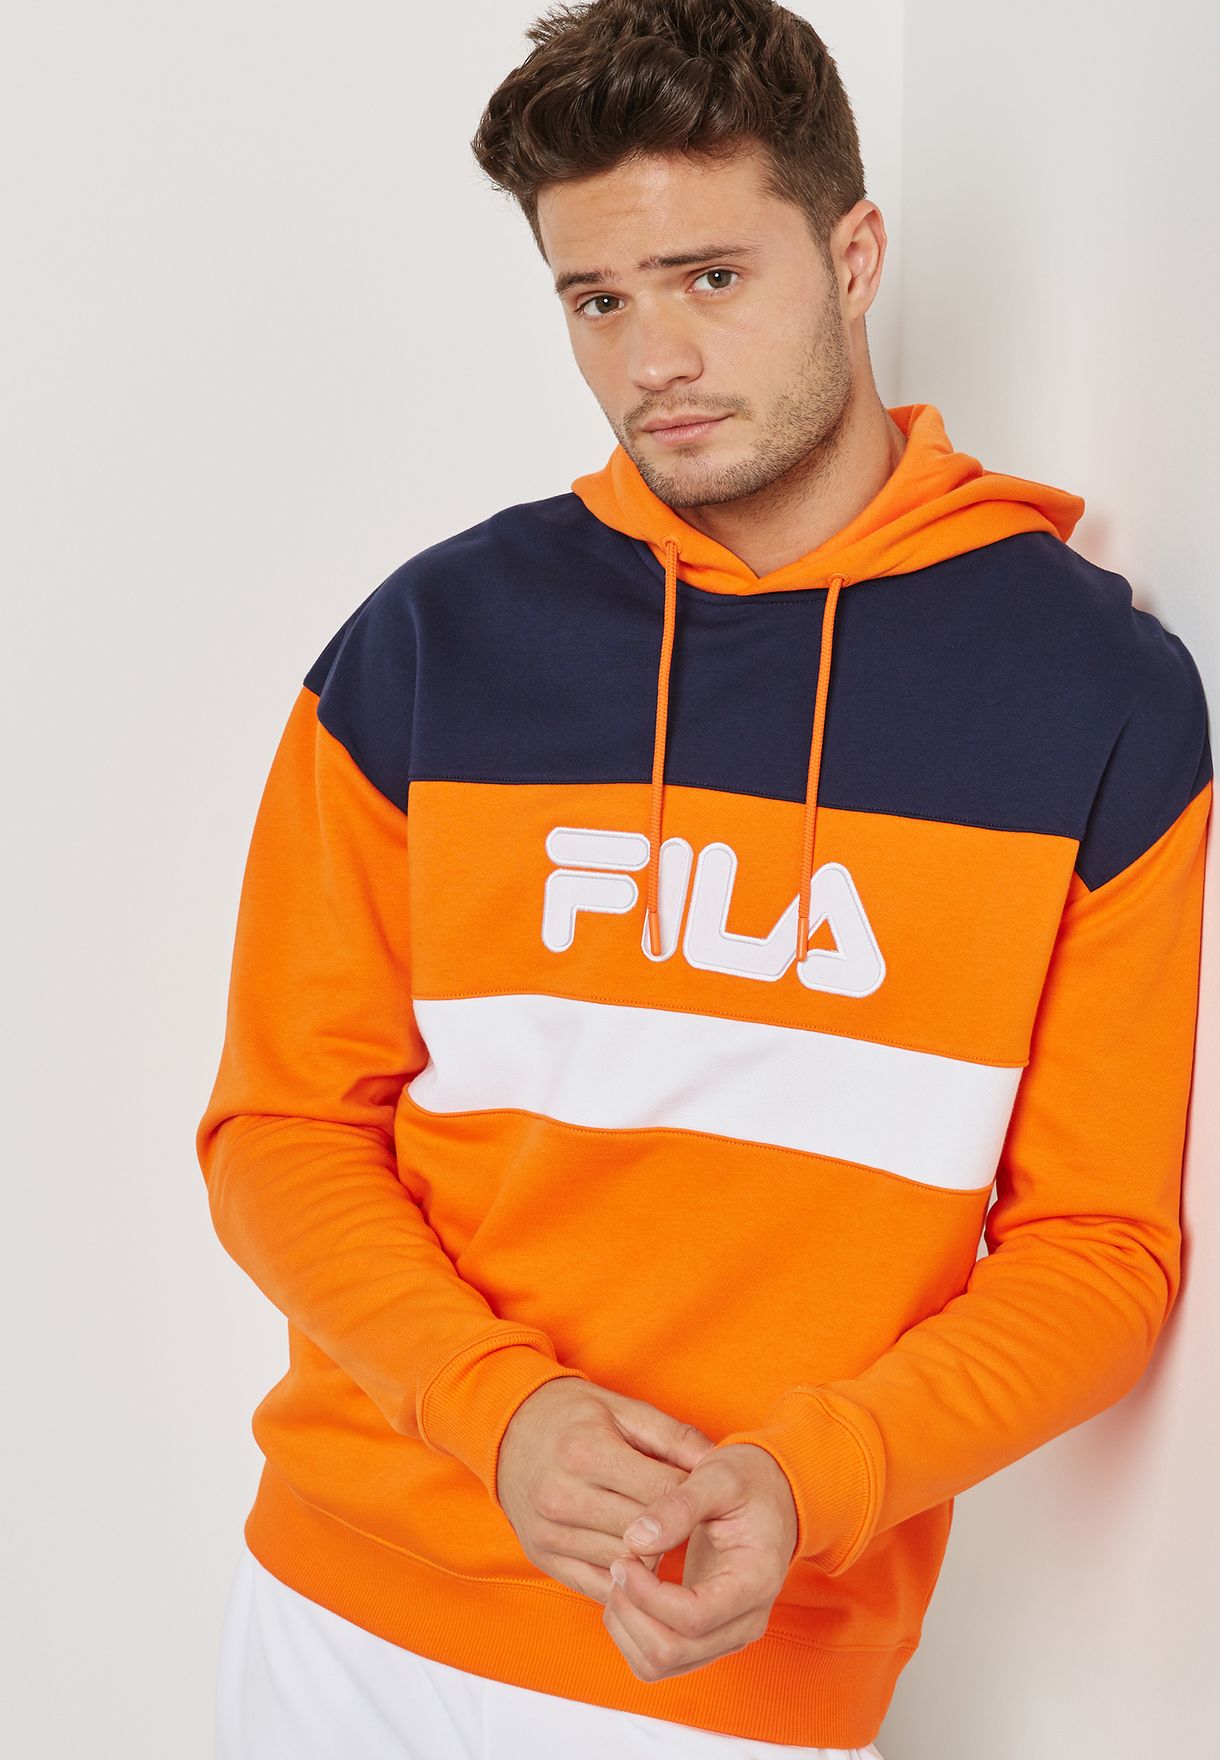 fila orange sweatshirt